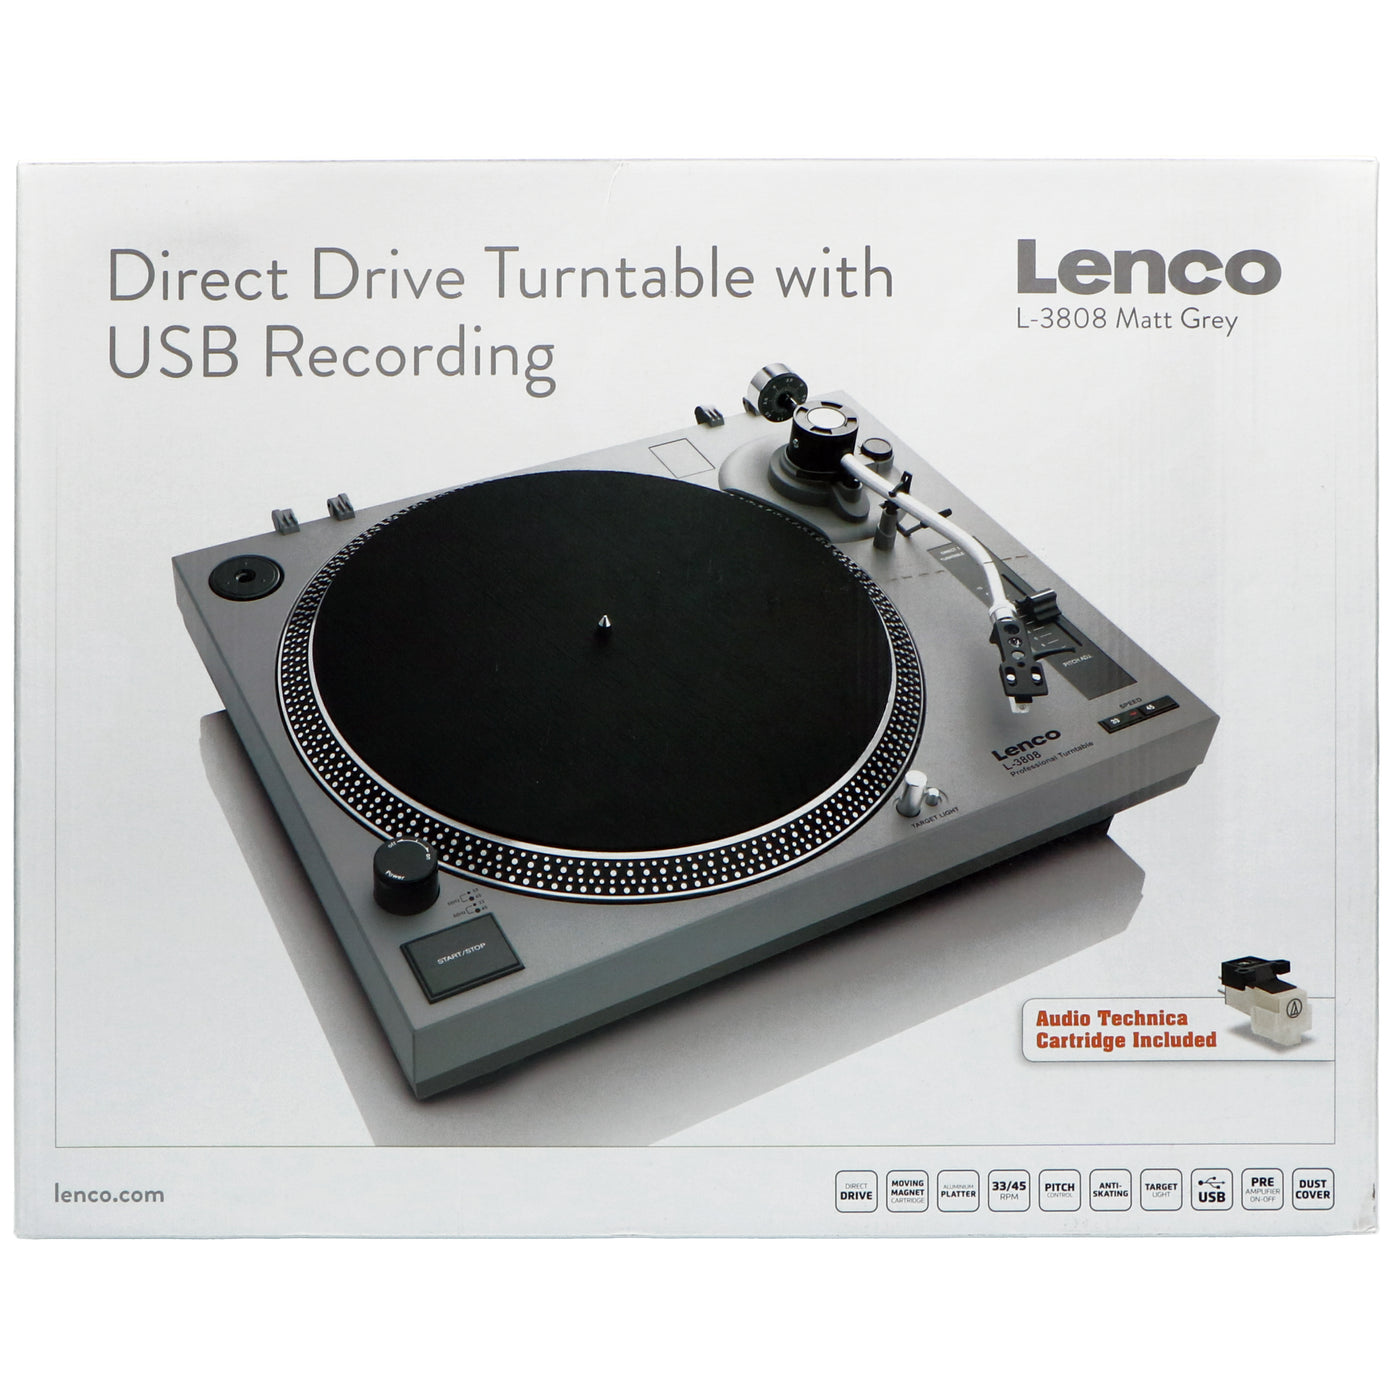 LENCO L-3808 Matt Grey - Direct aangedreven Platenspeler met USB/PC encoding - Mat grijs